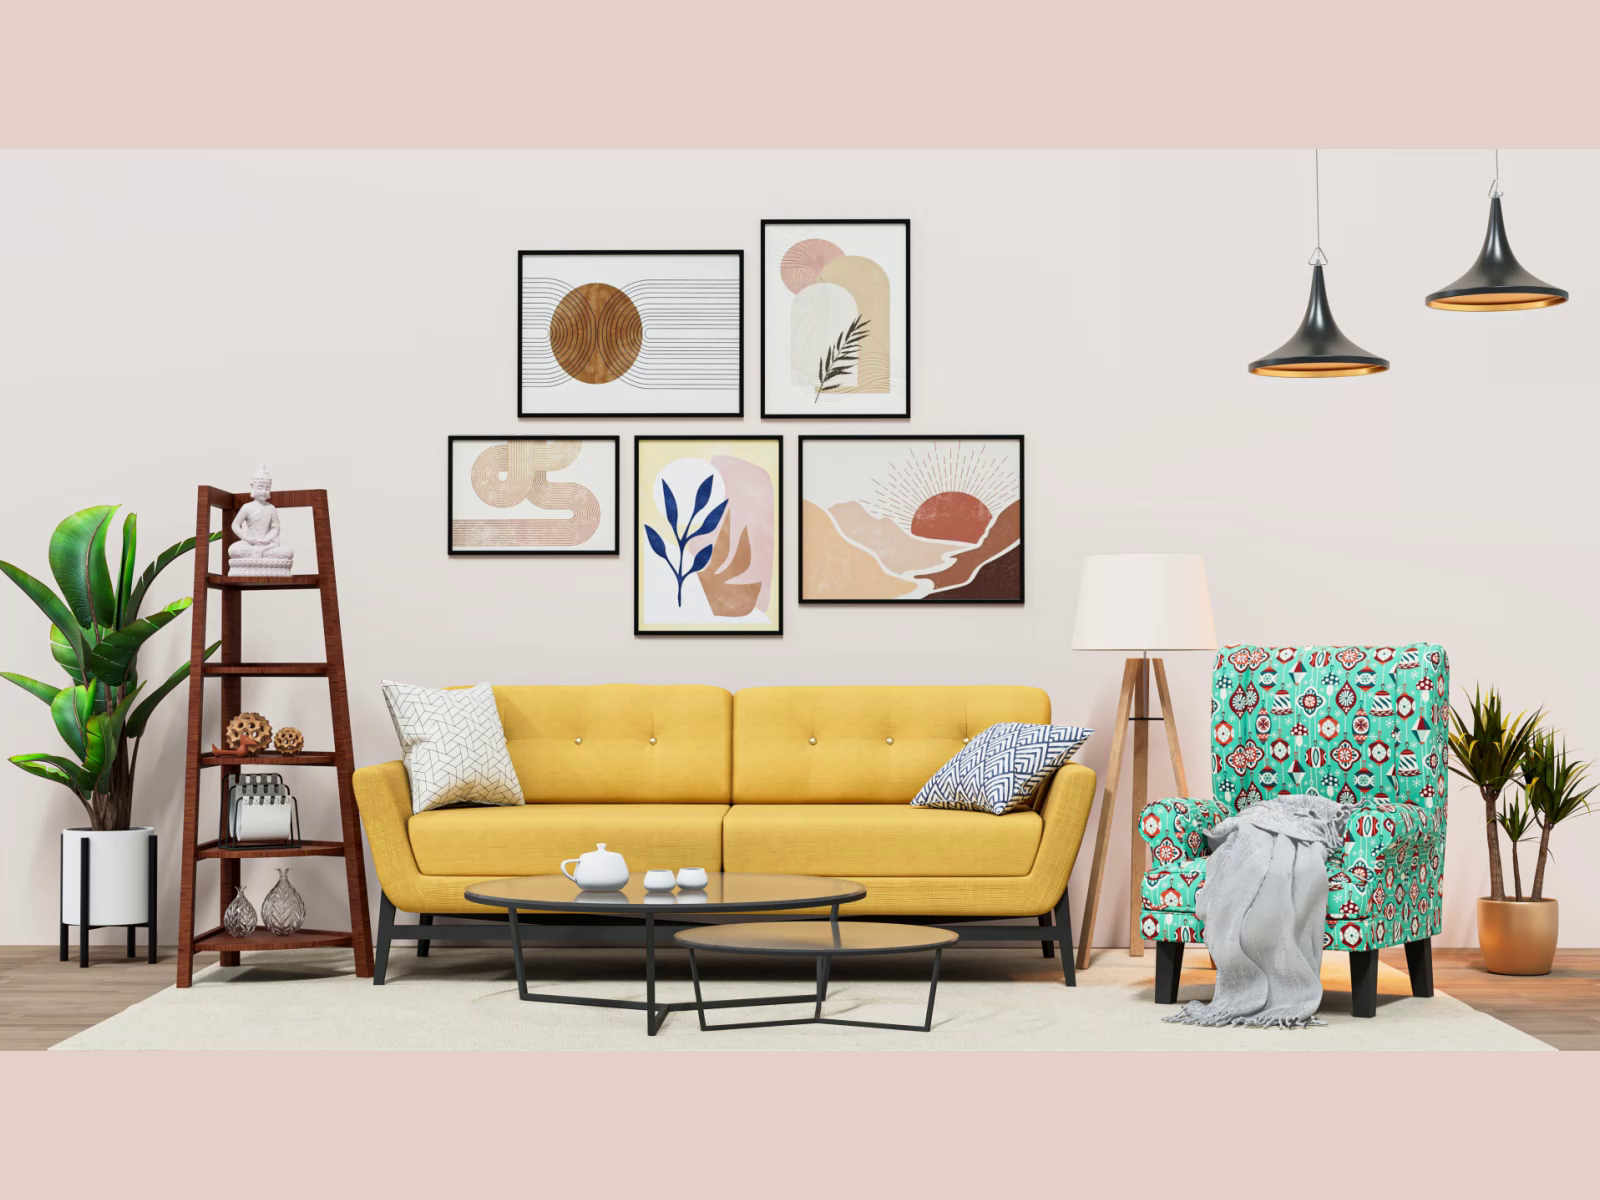 3D Living Room Interior Design by illuminz on Dribbble